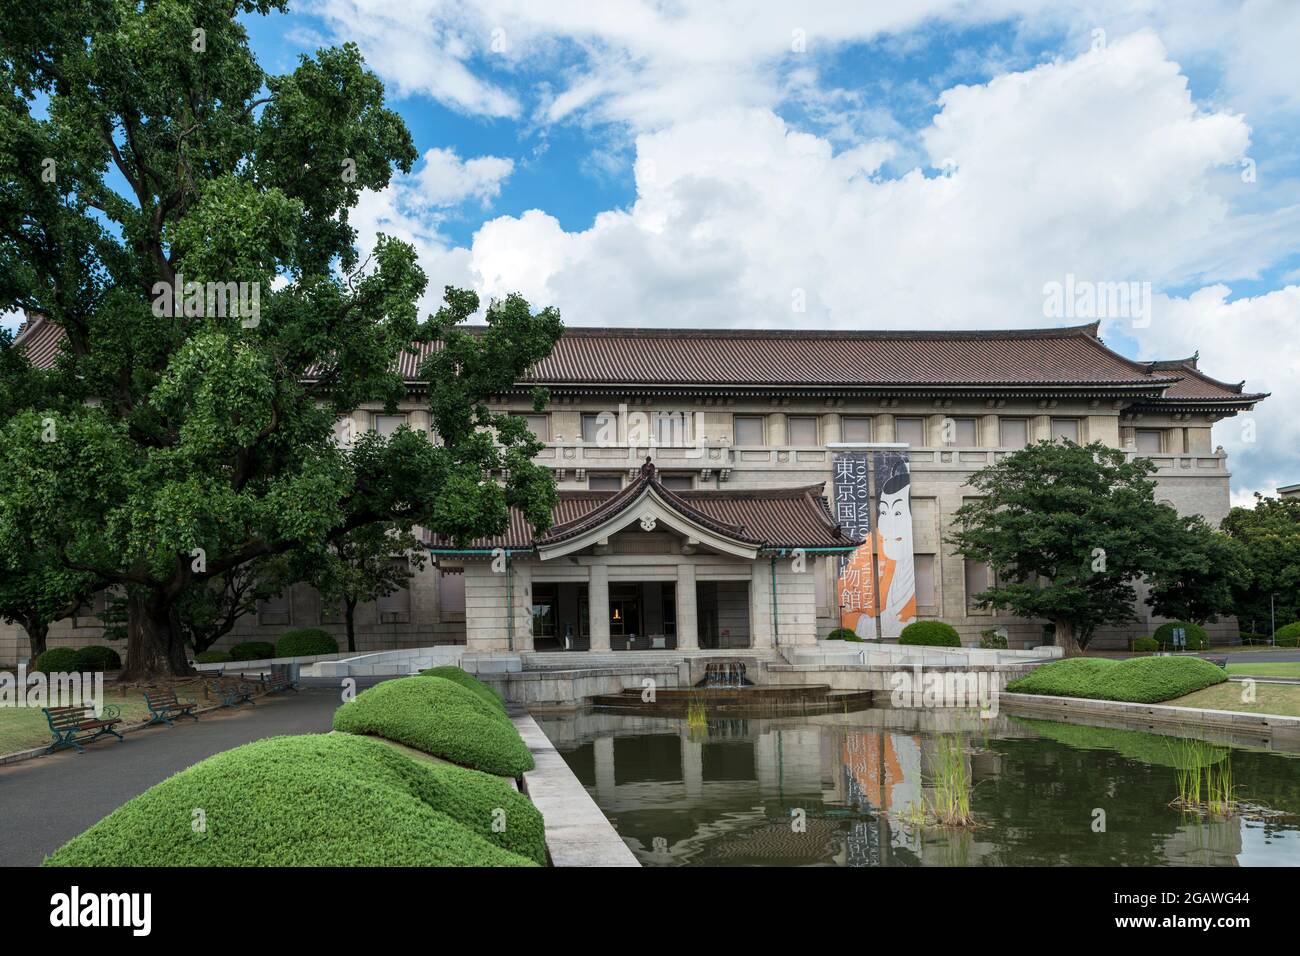 Musée national de Tokyo, Honkan, Ueno, Tokyo, Japon Banque D'Images